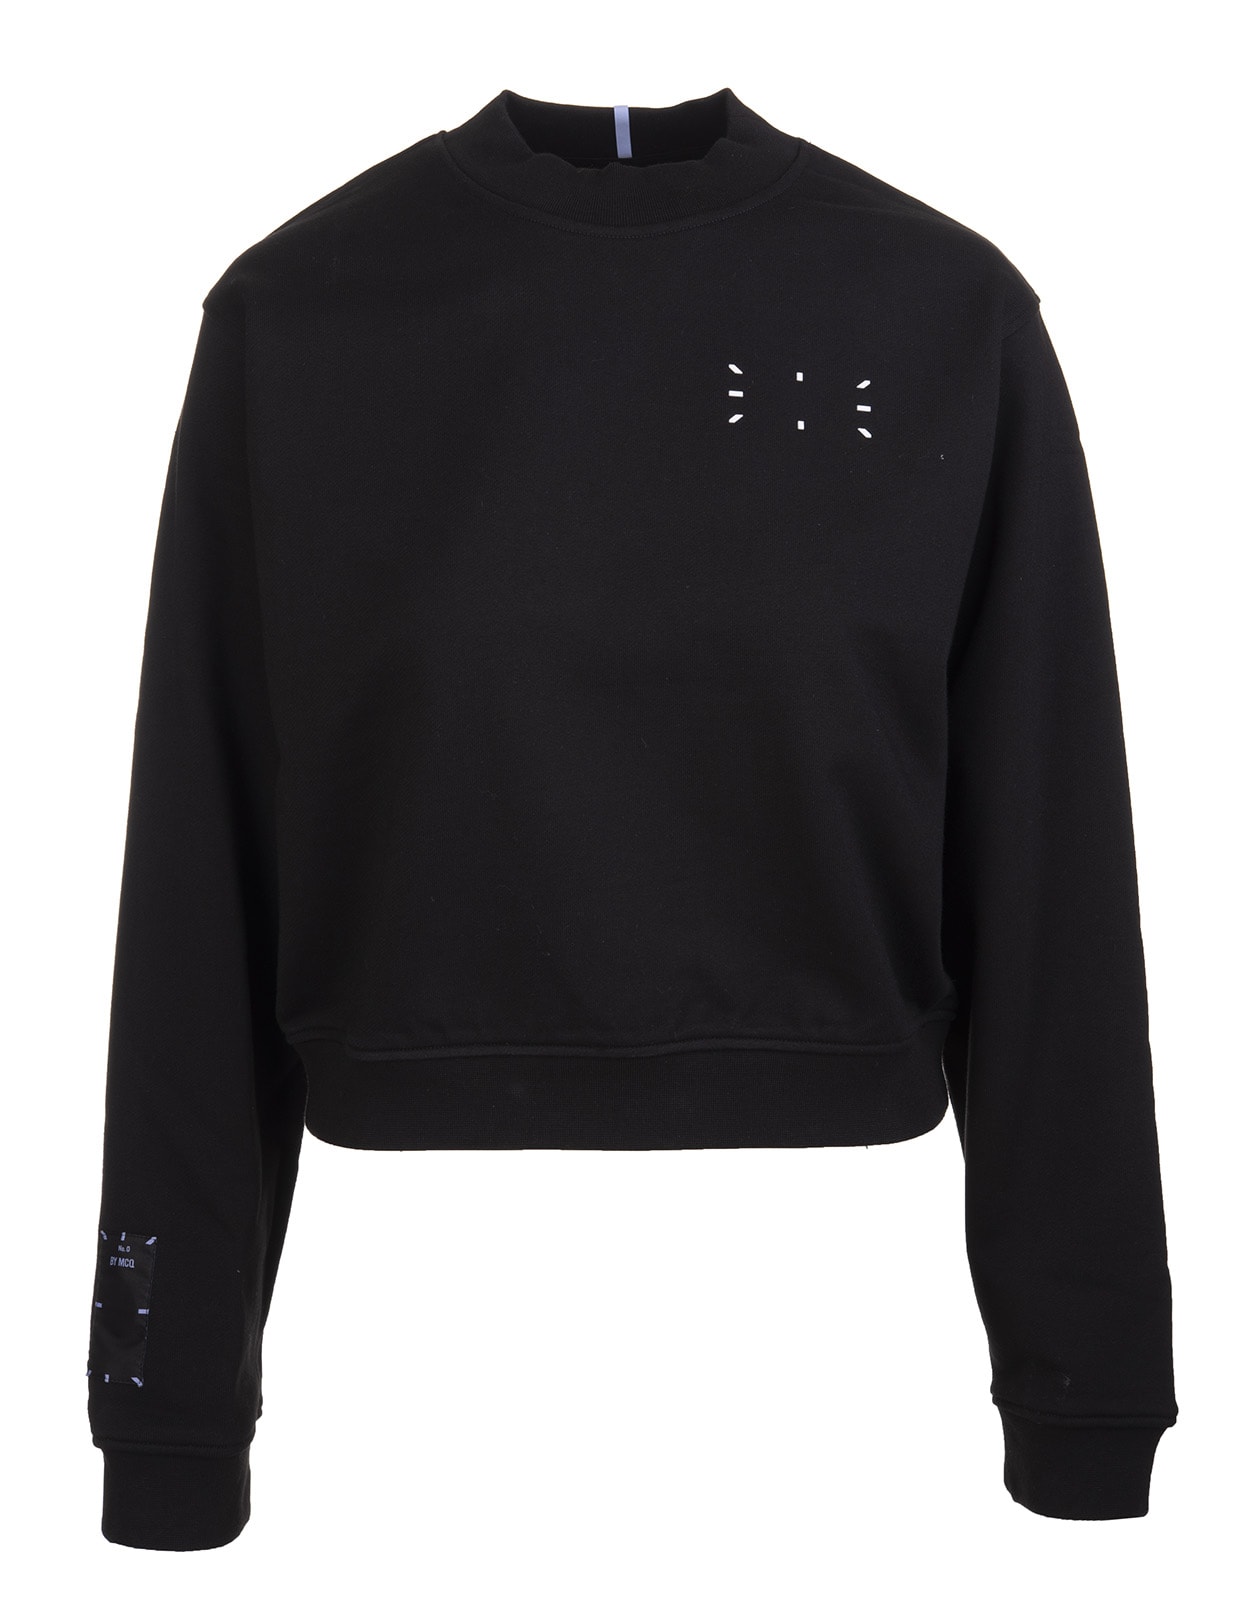 McQ Alexander McQueen Black Logo Print Sweatshirt Woman